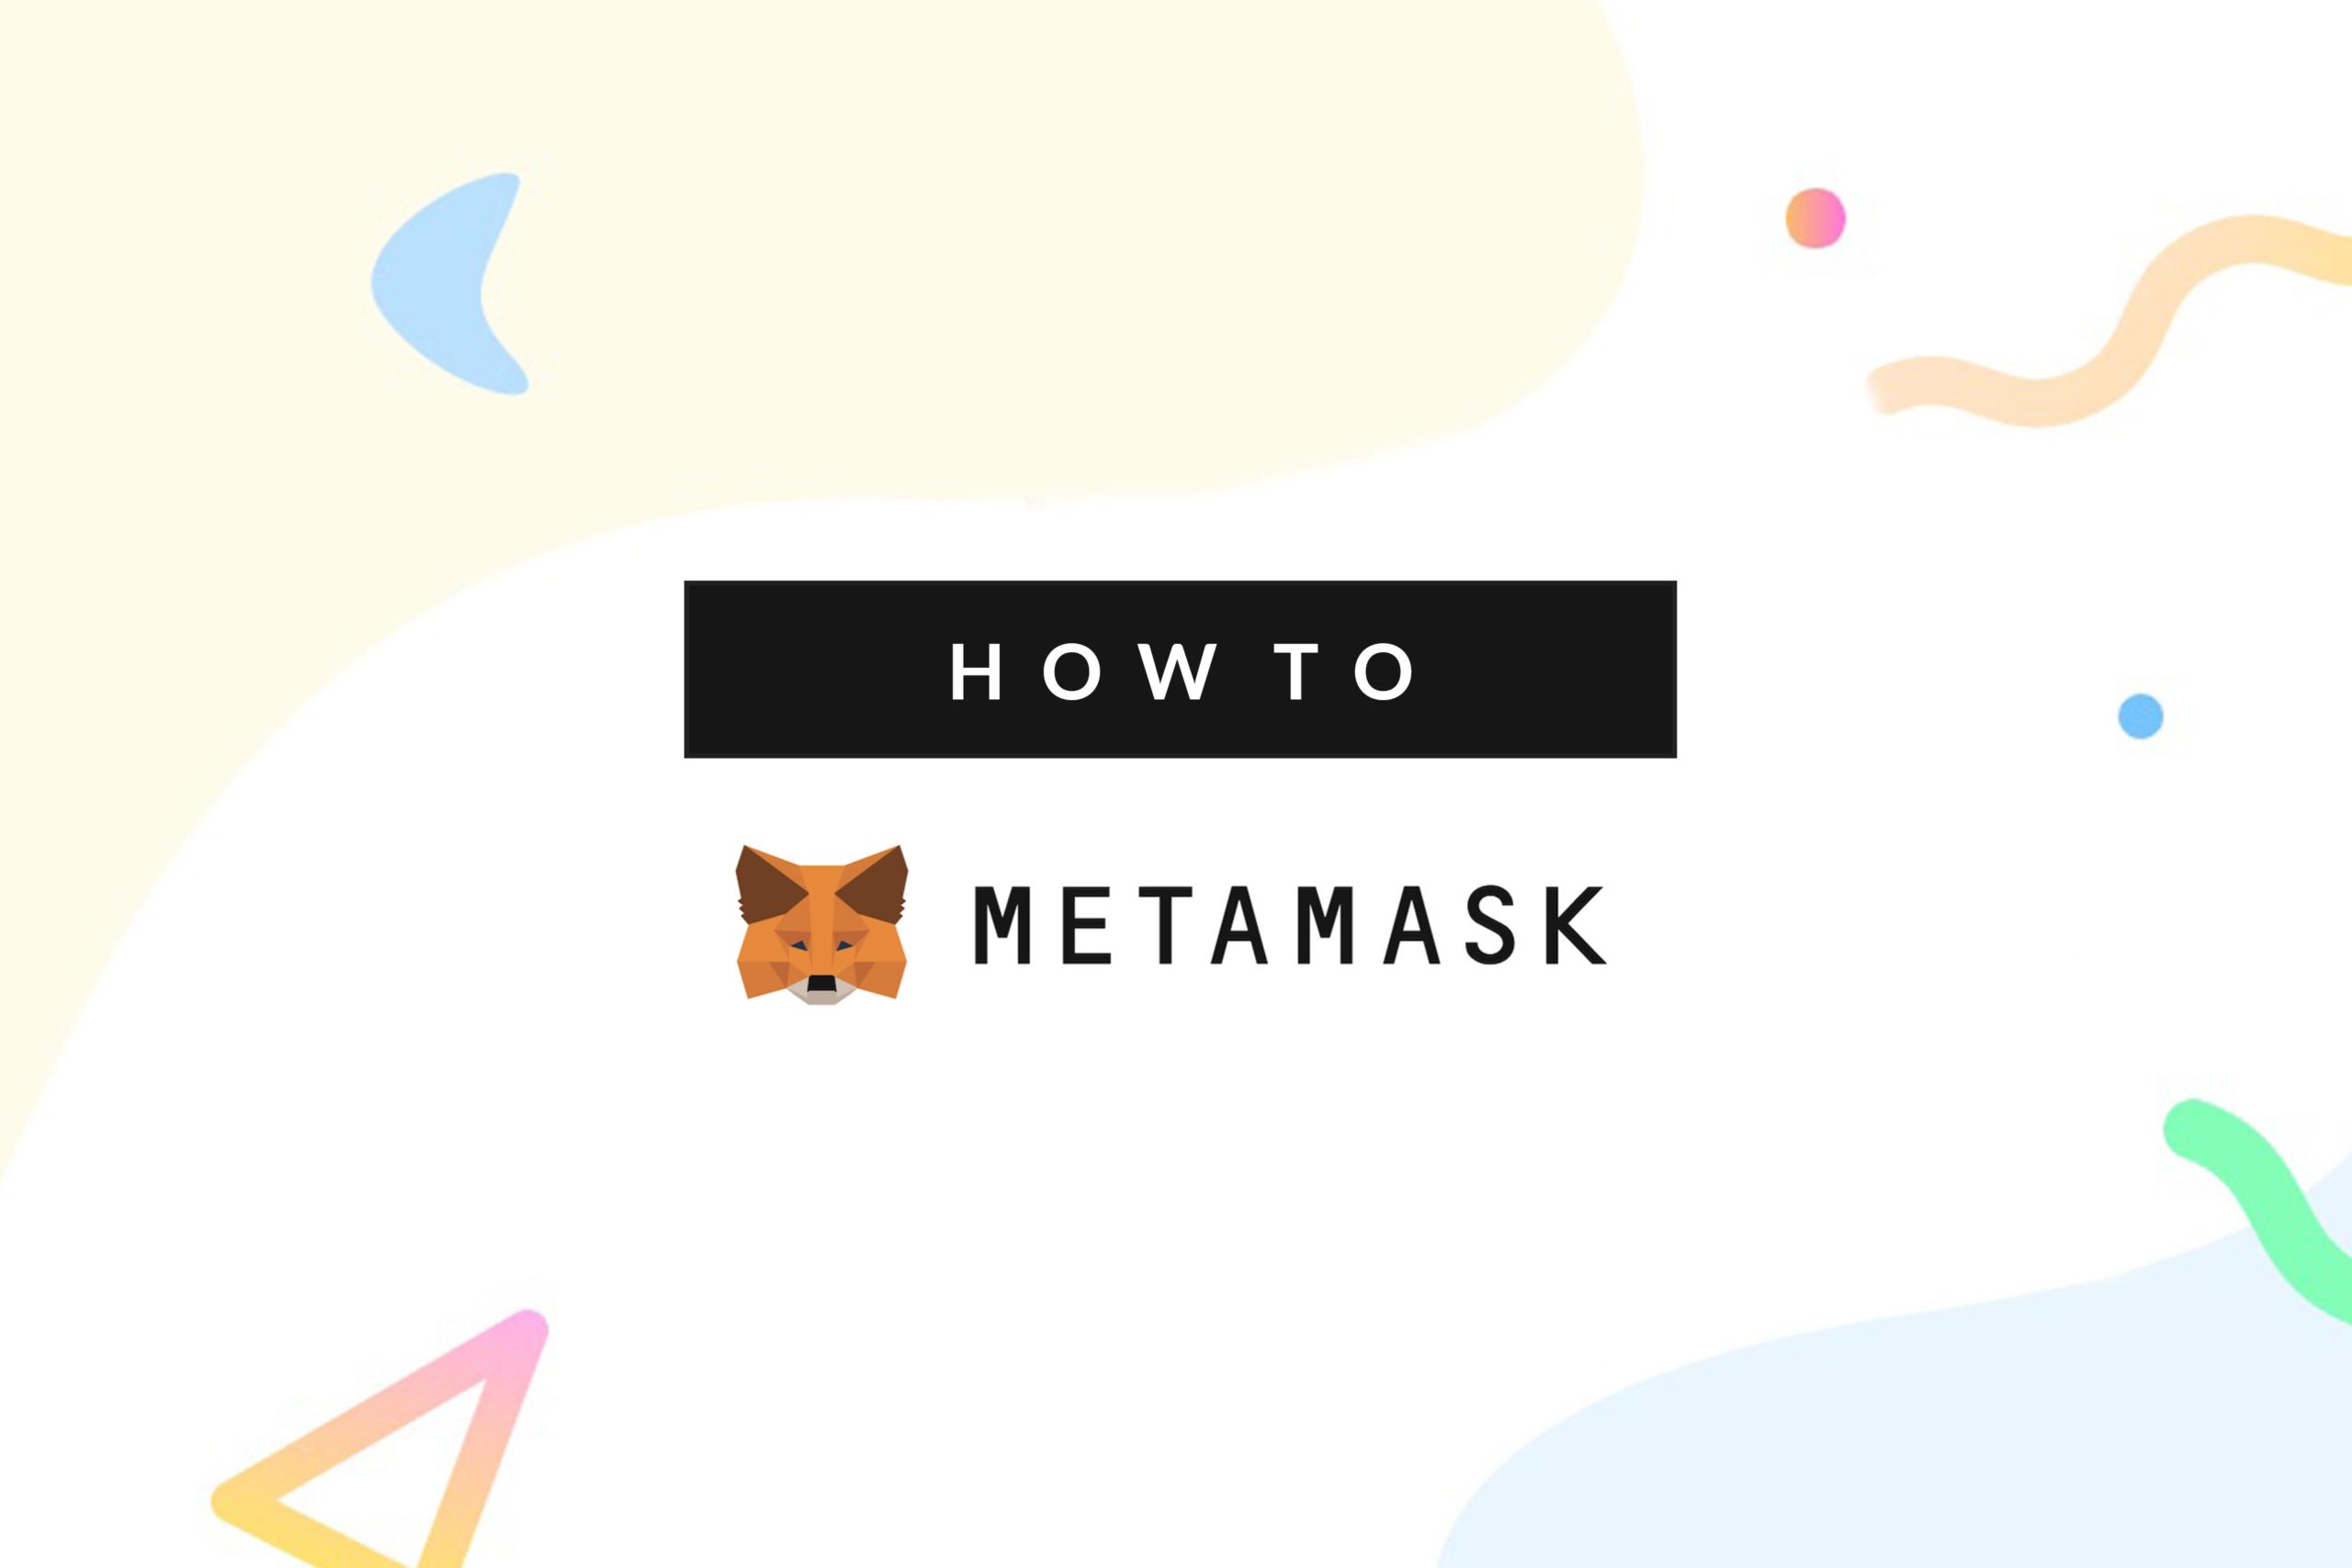 Come si usa Metamask? La guida completa al wallet Ethereum per DApp e Web3.